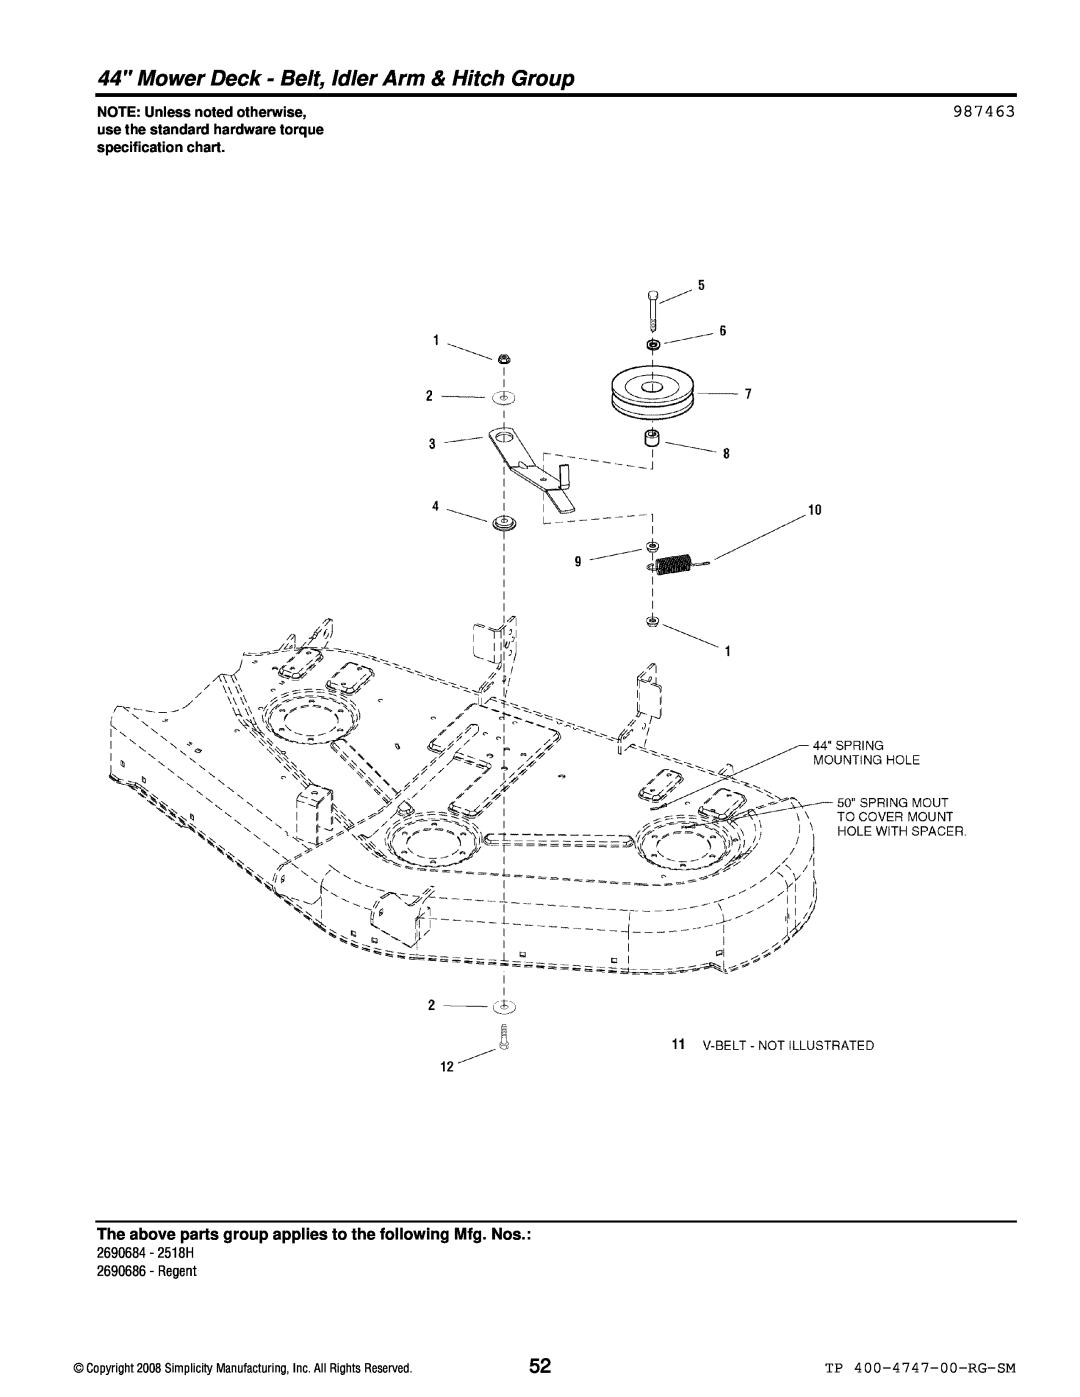 Simplicity Regent / 2500 manual Mower Deck - Belt, Idler Arm & Hitch Group, 987463, TP 400-4747-00-RG-SM 